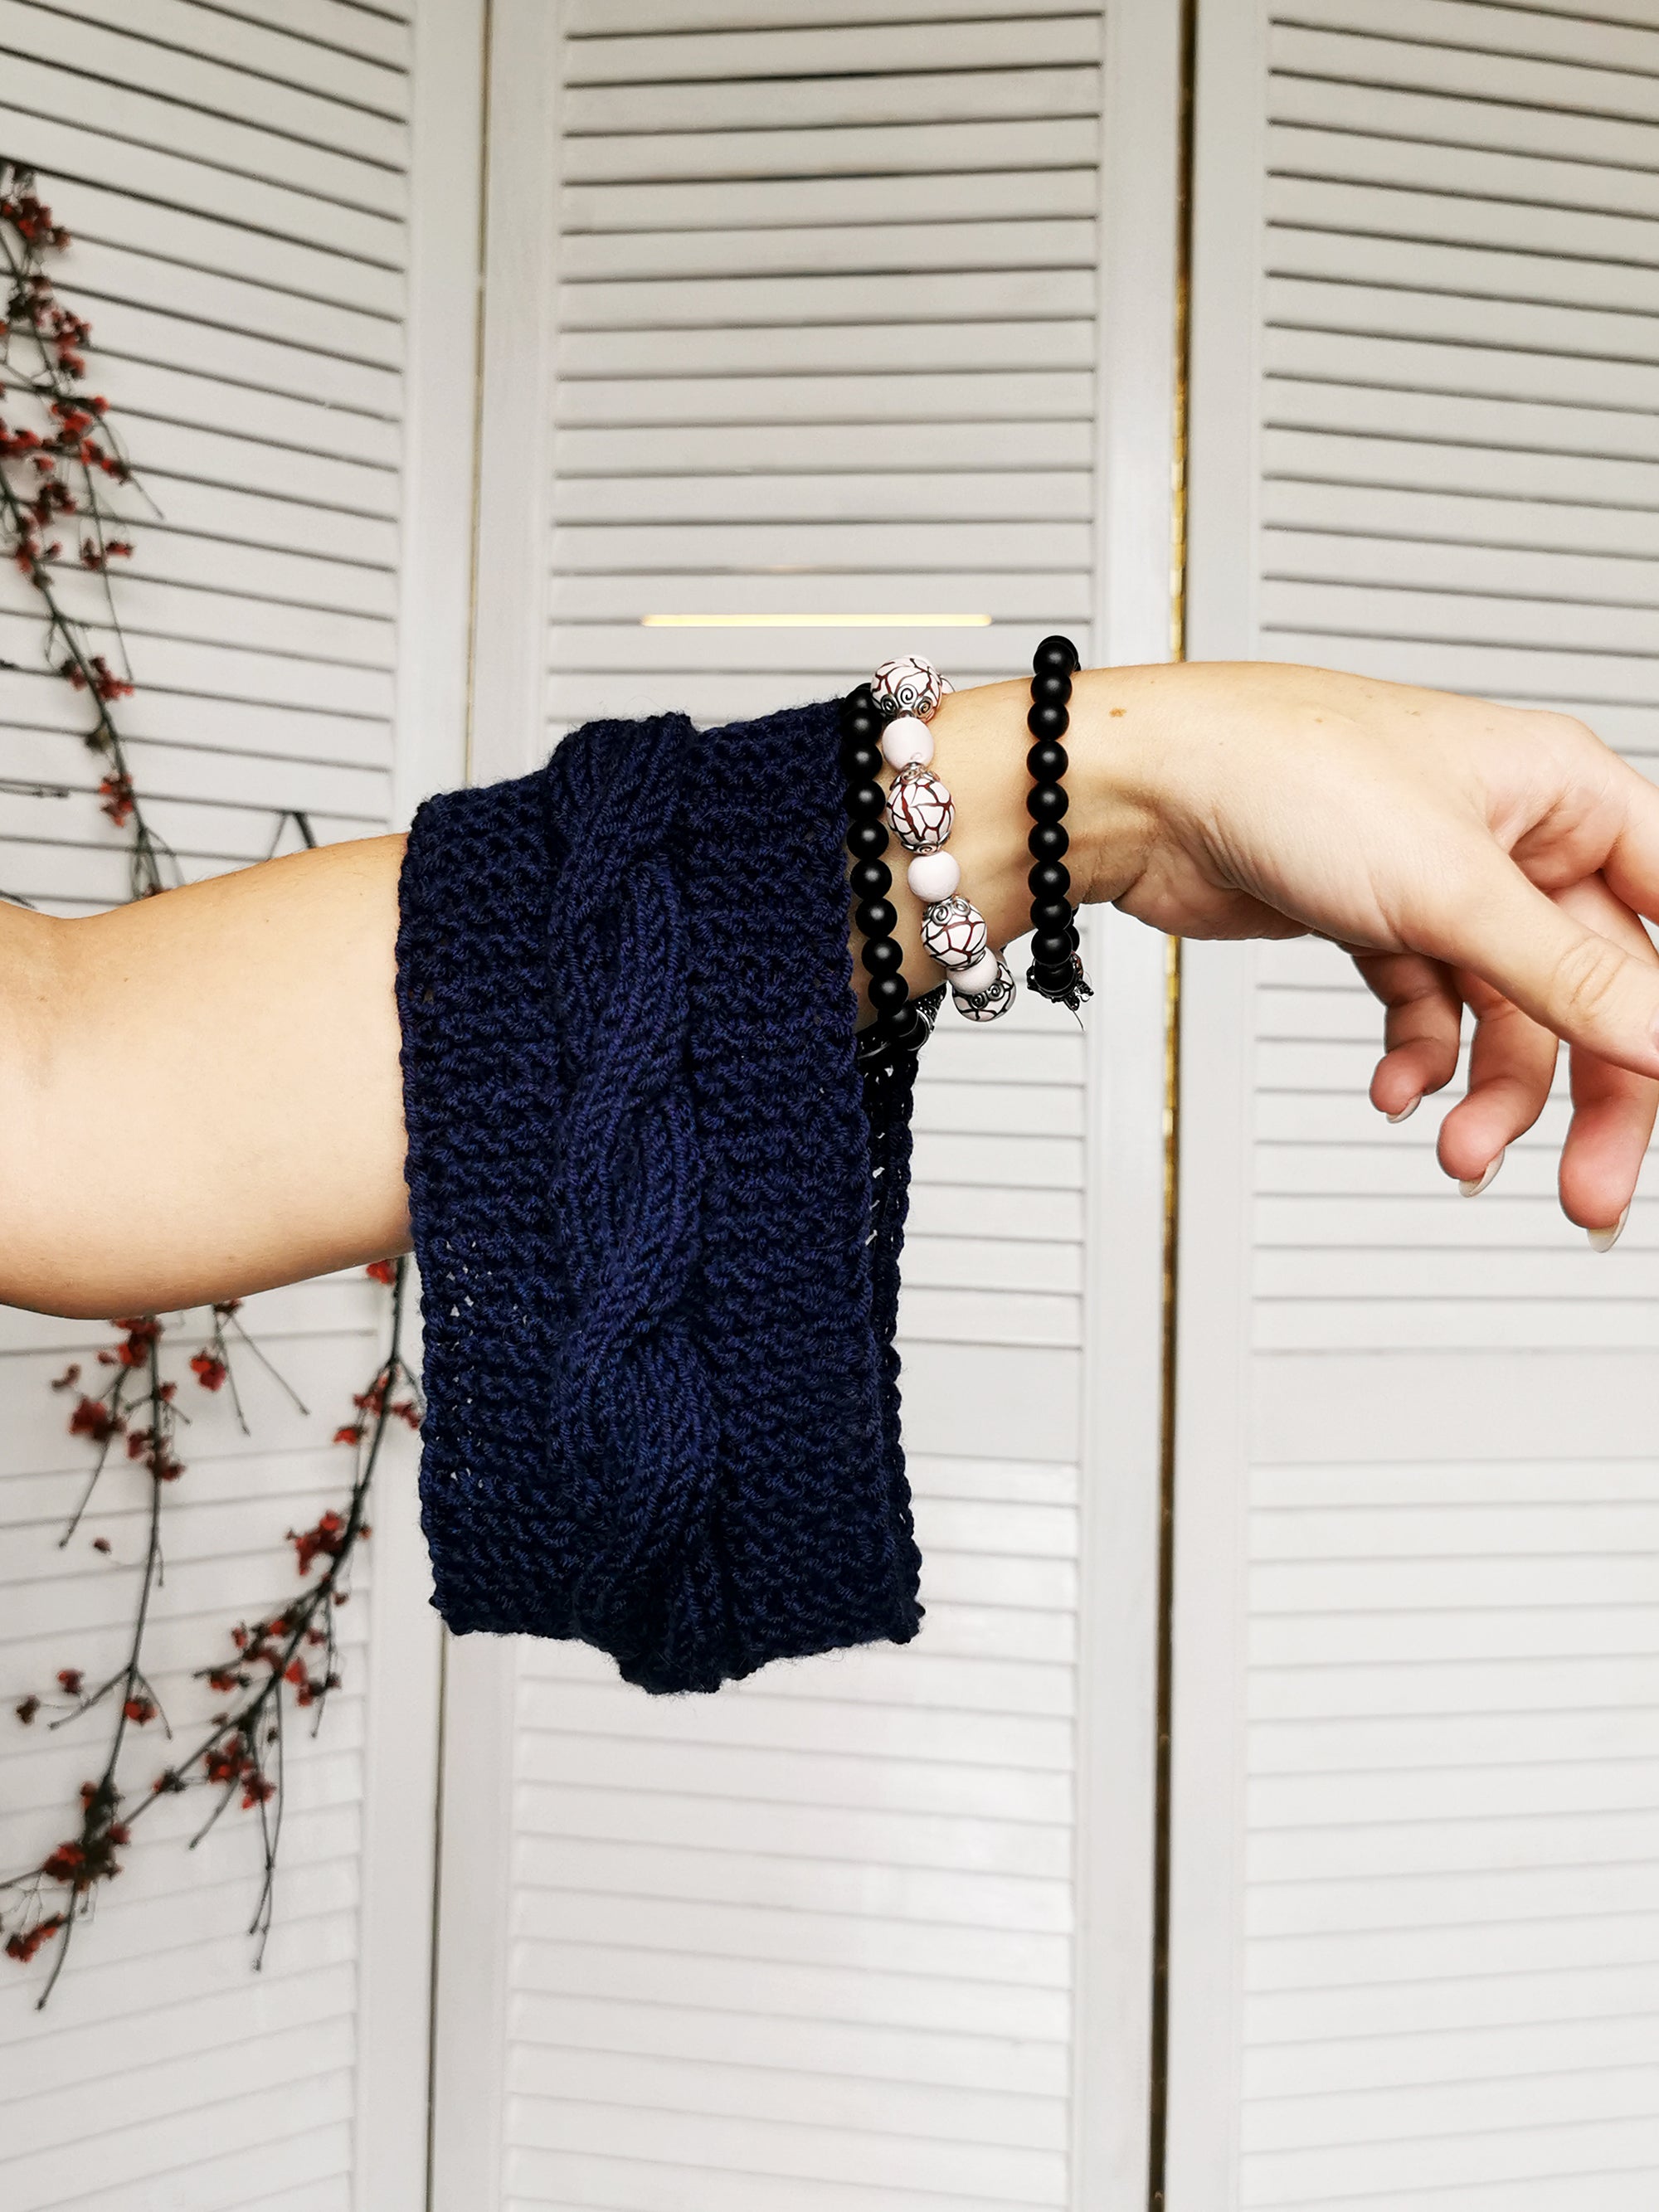 Merino wool handmade knitted winter headband in navy blue